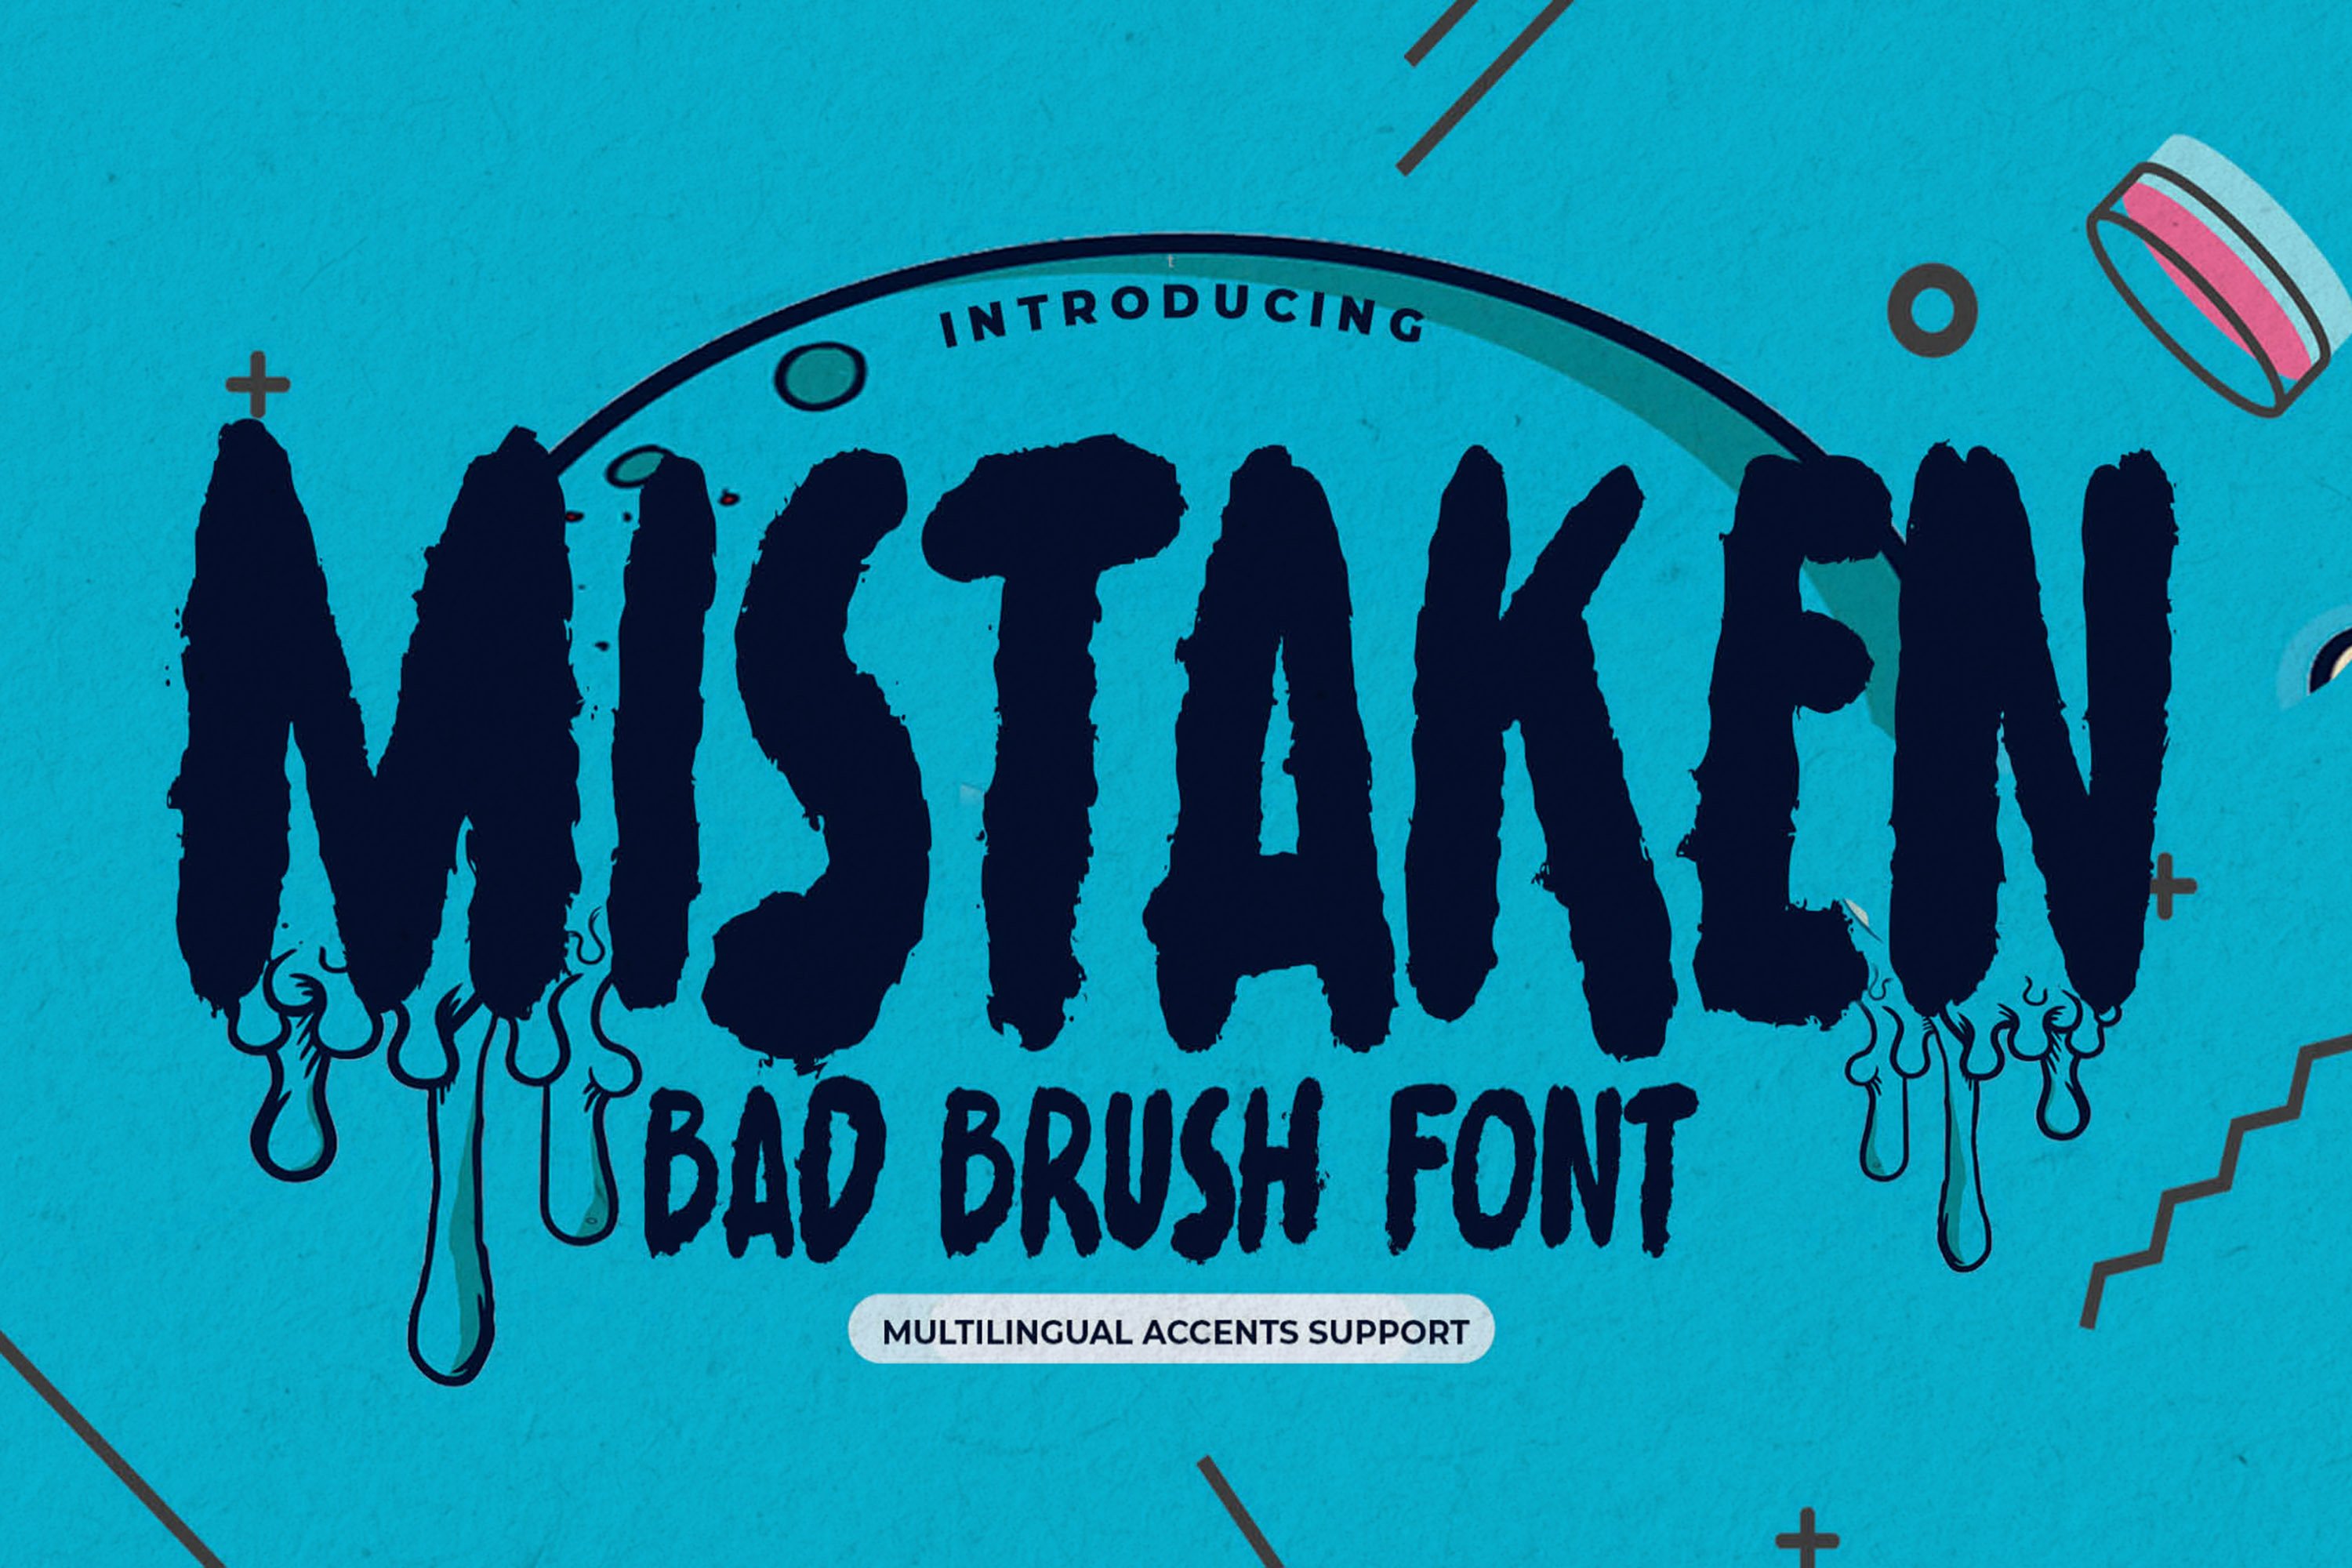 MISTAKEN - Bad Brush Font cover image.